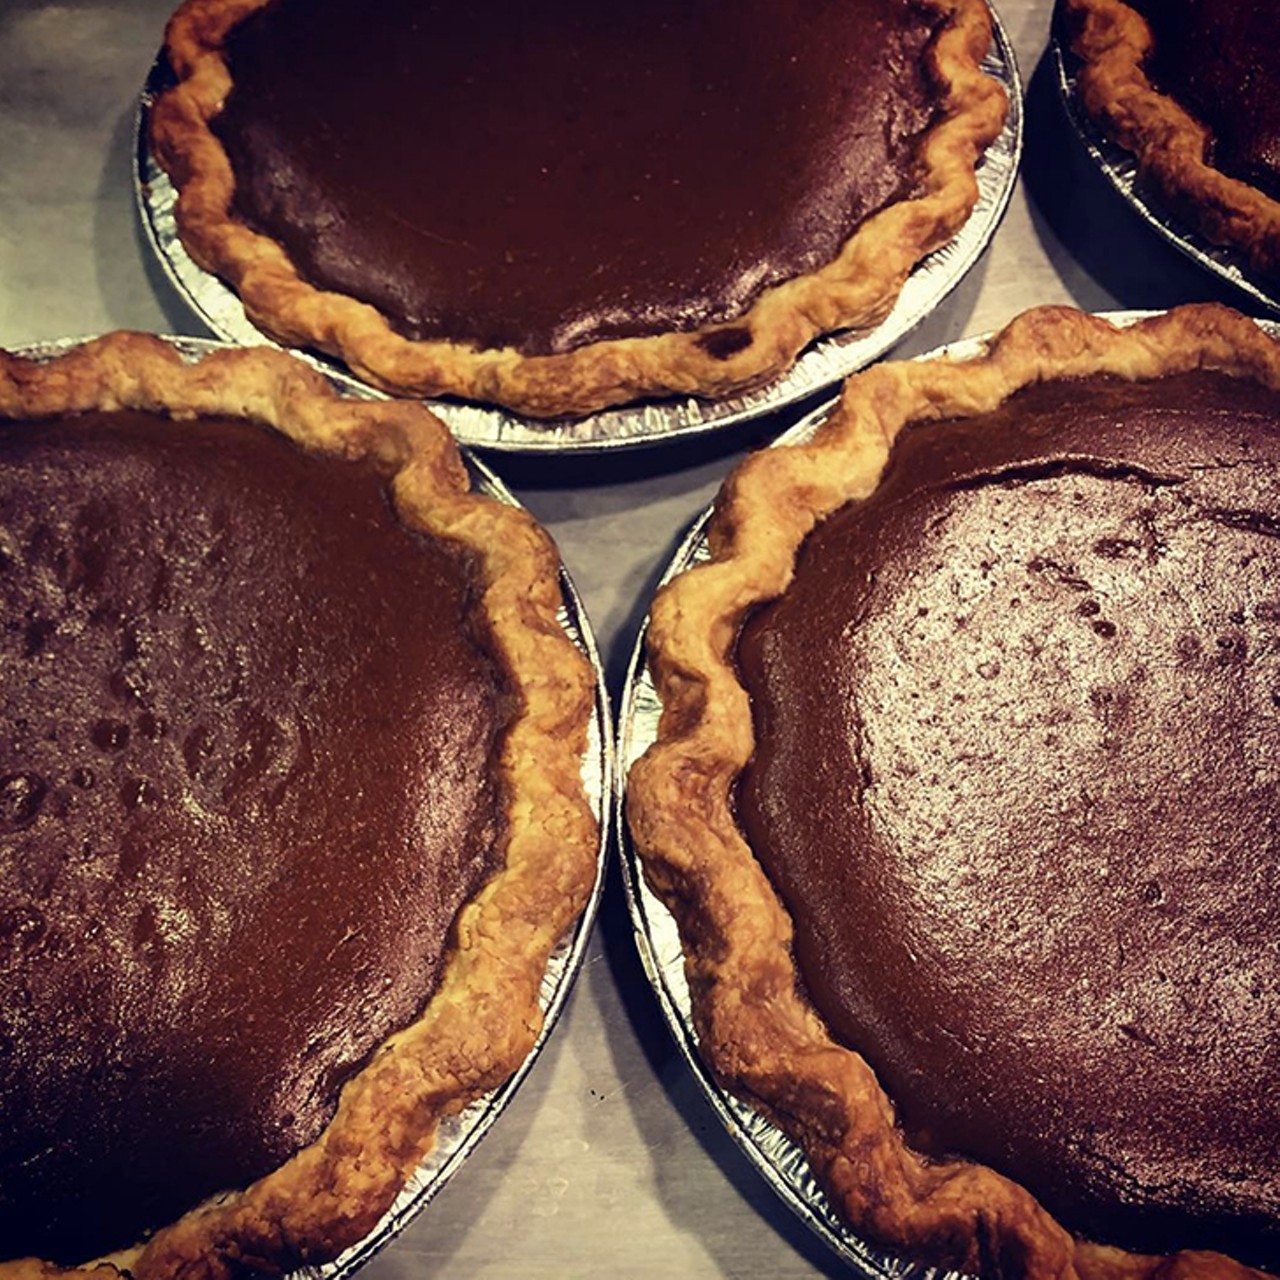 O Pie O
Brown-butter pumpkin pie
1527 Madison Road, East Walnut Hills
Photo via Instagram.com/OPieOBakery